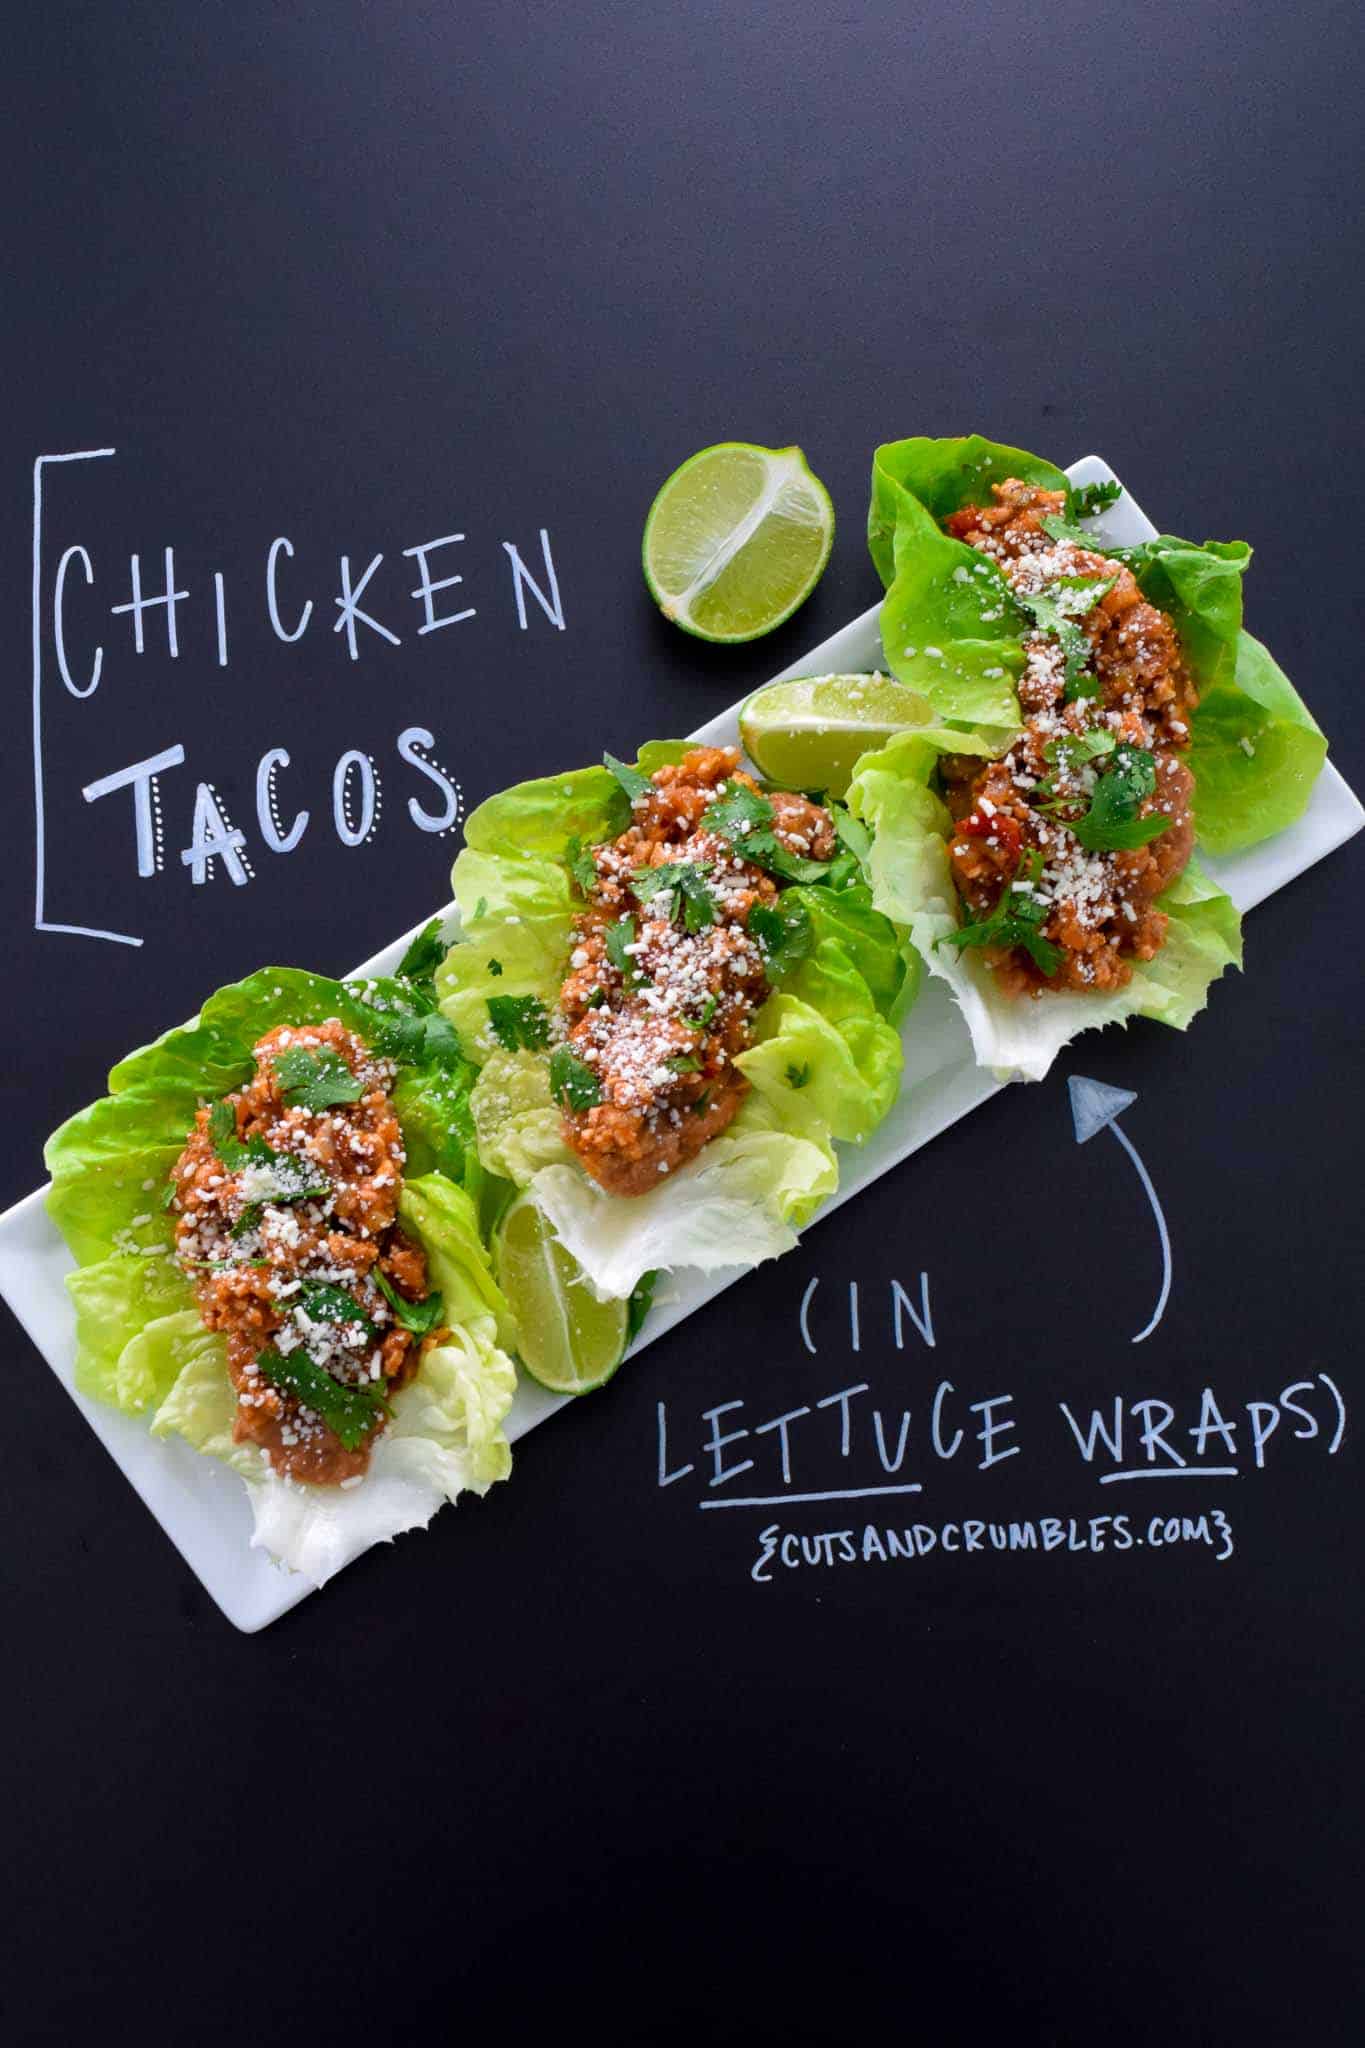 Chicken Tacos in Lettuce Wraps with title written on chalkboard